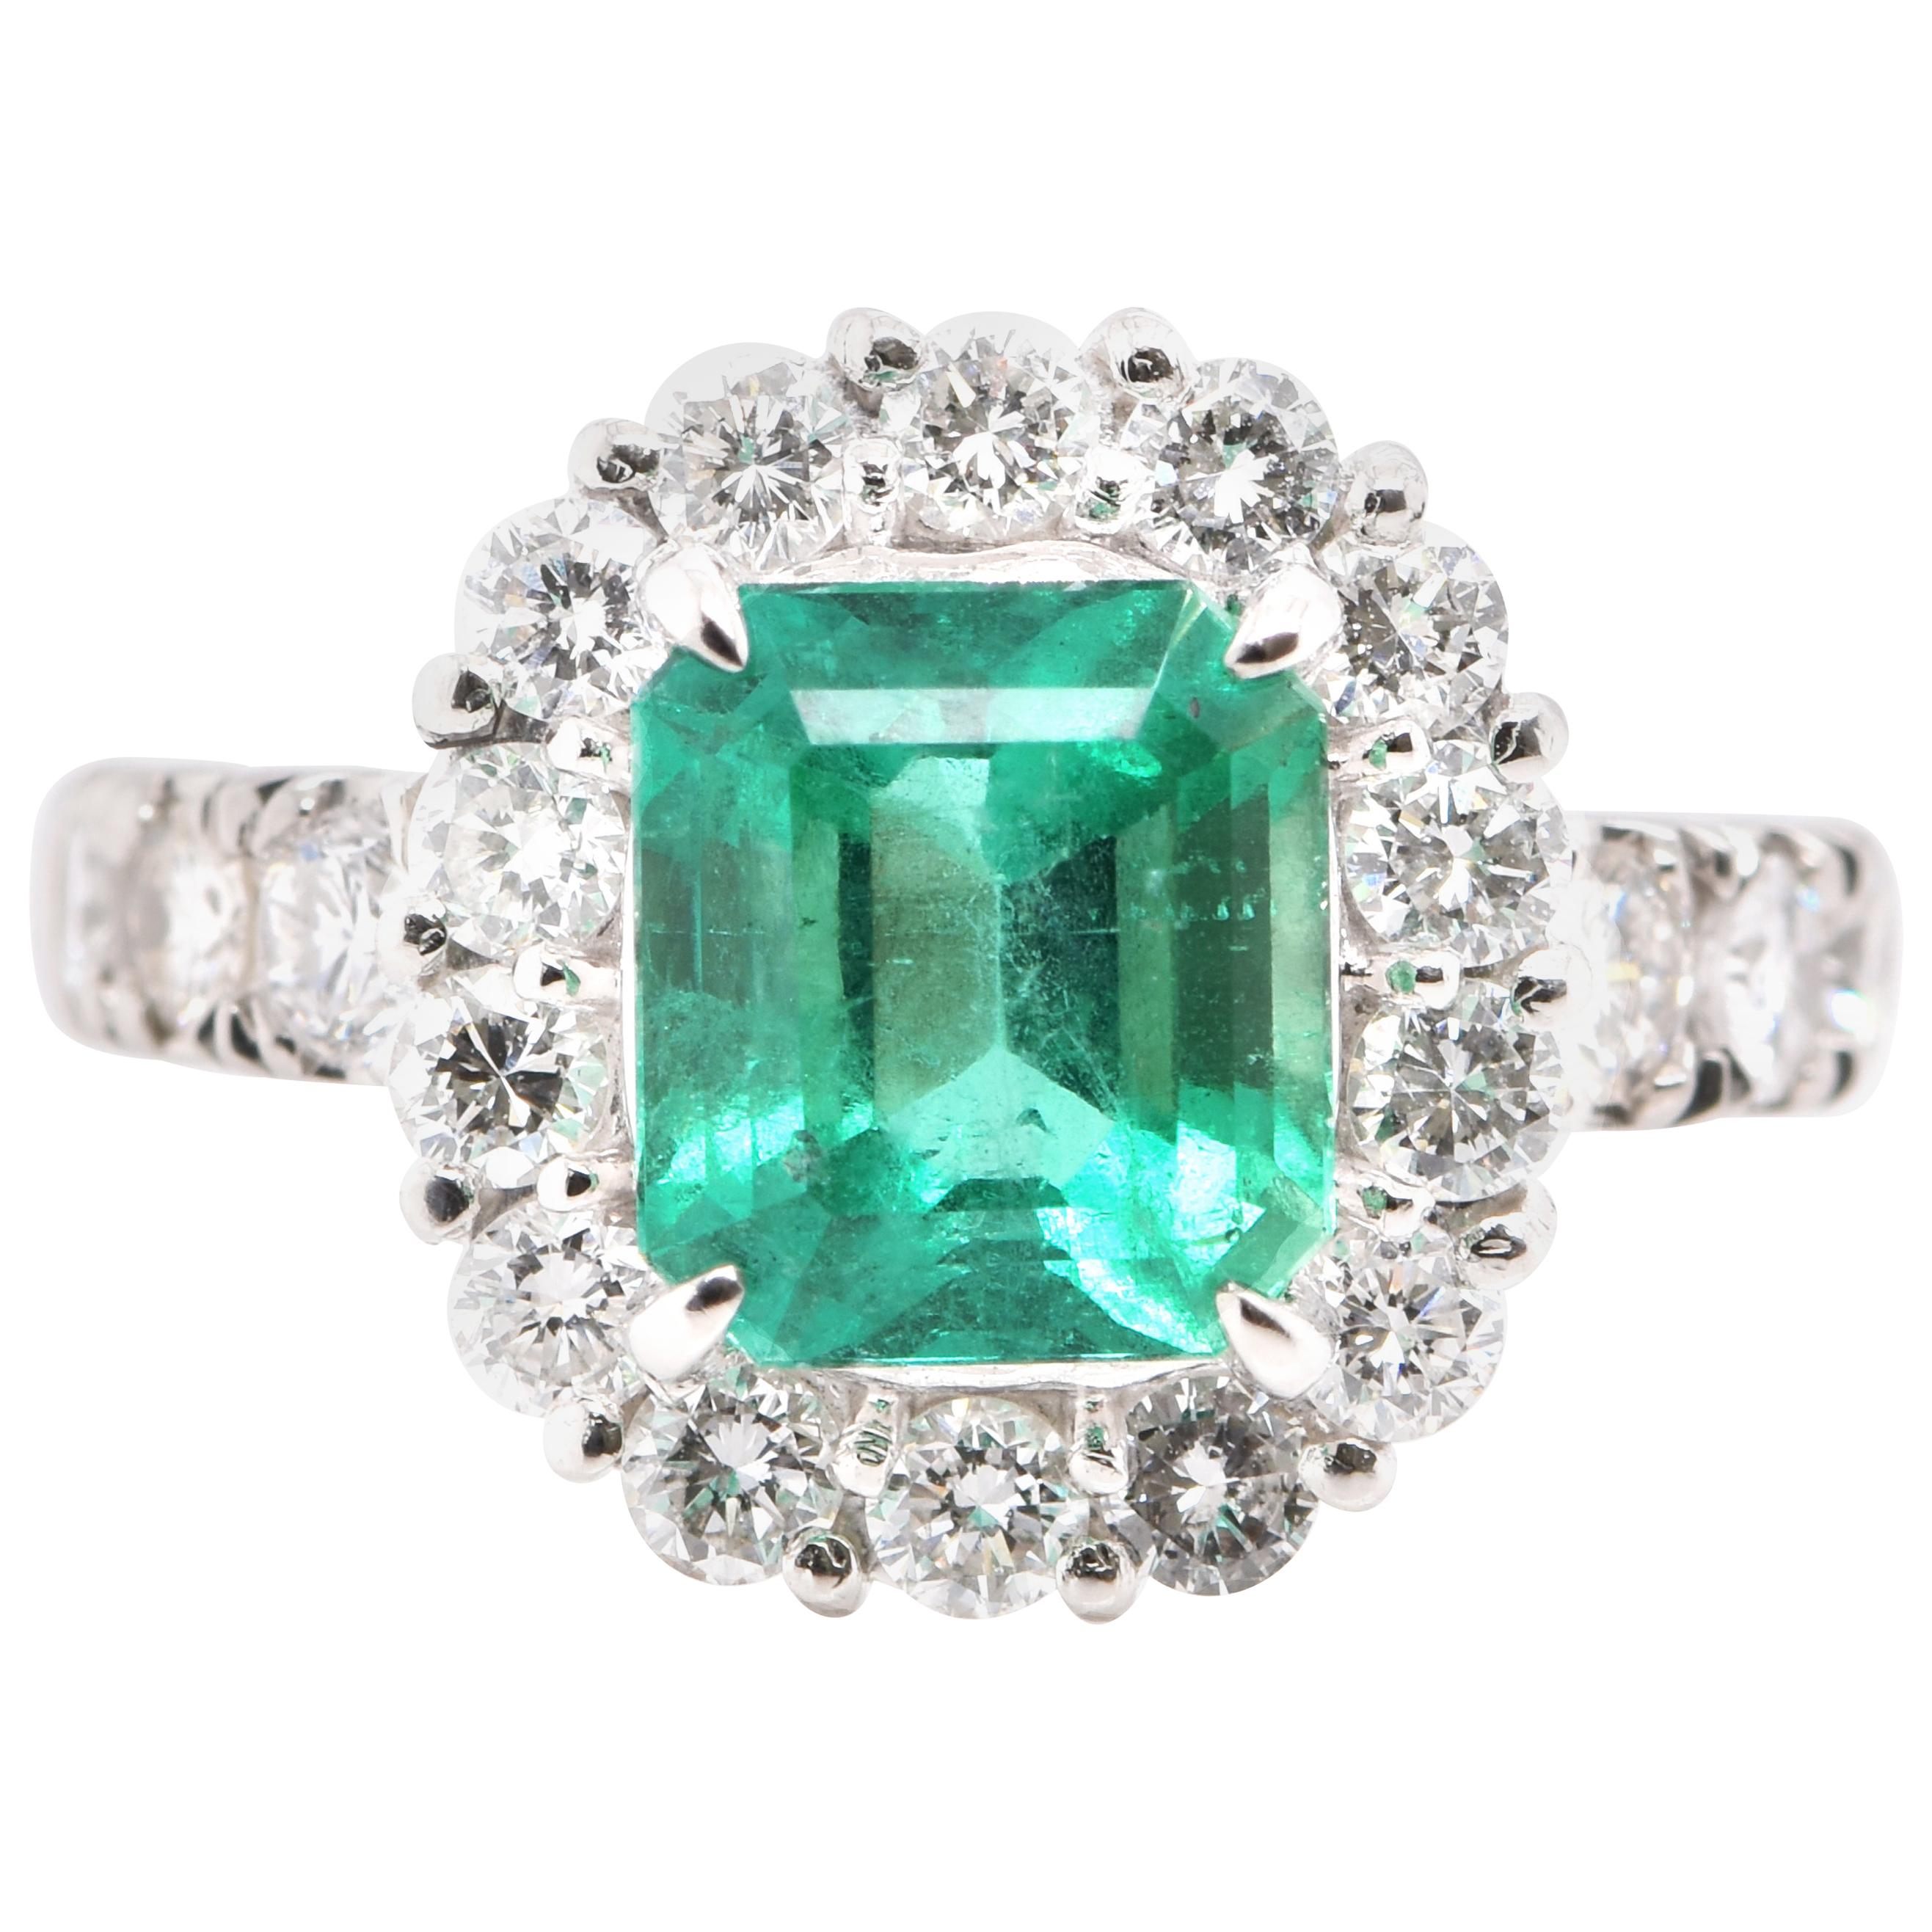 2.24 Carat Natural Emerald and Diamond Halo Engagement Ring Set in Platinum